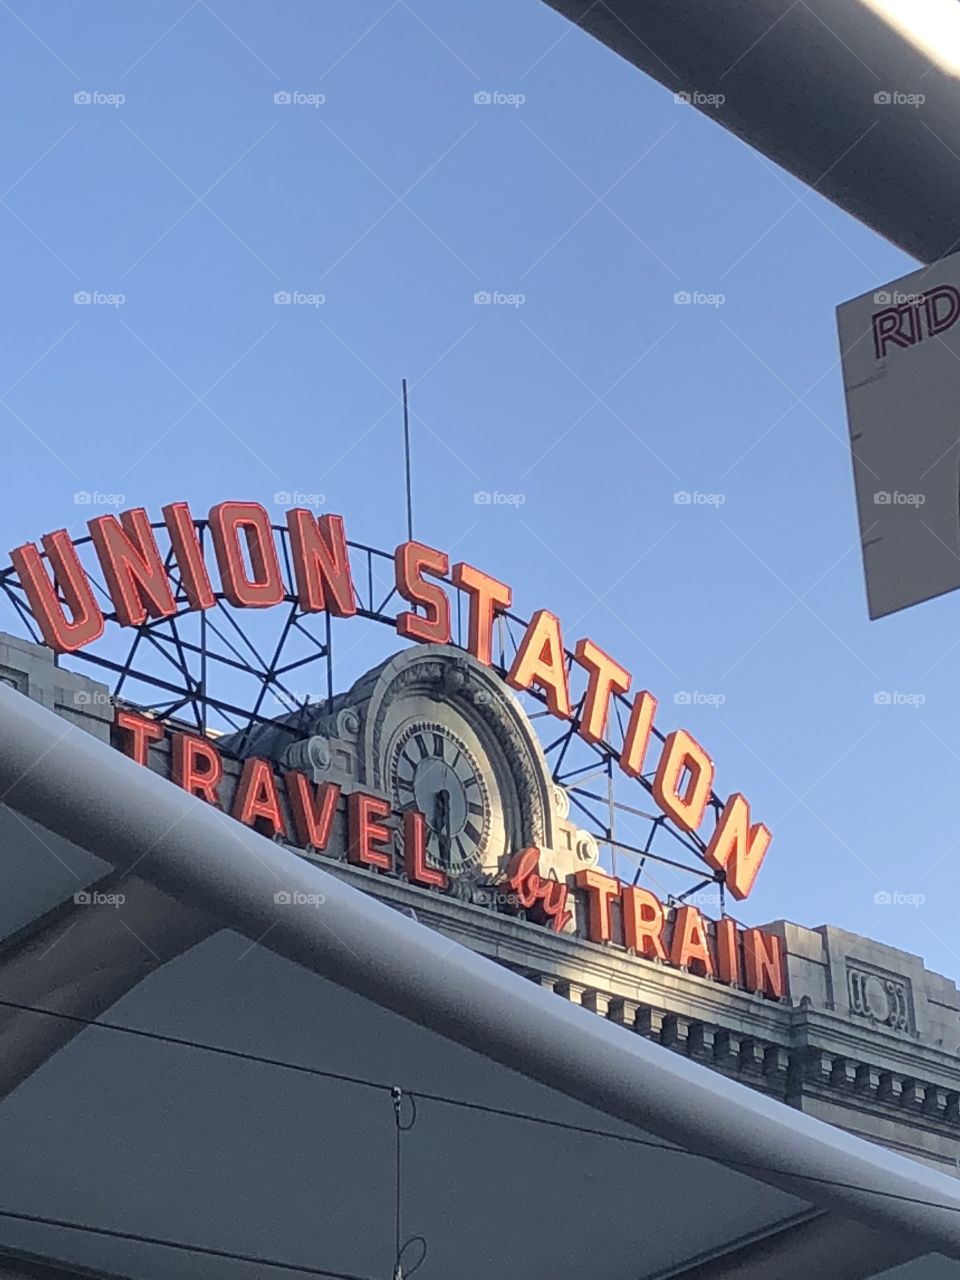 Union station 